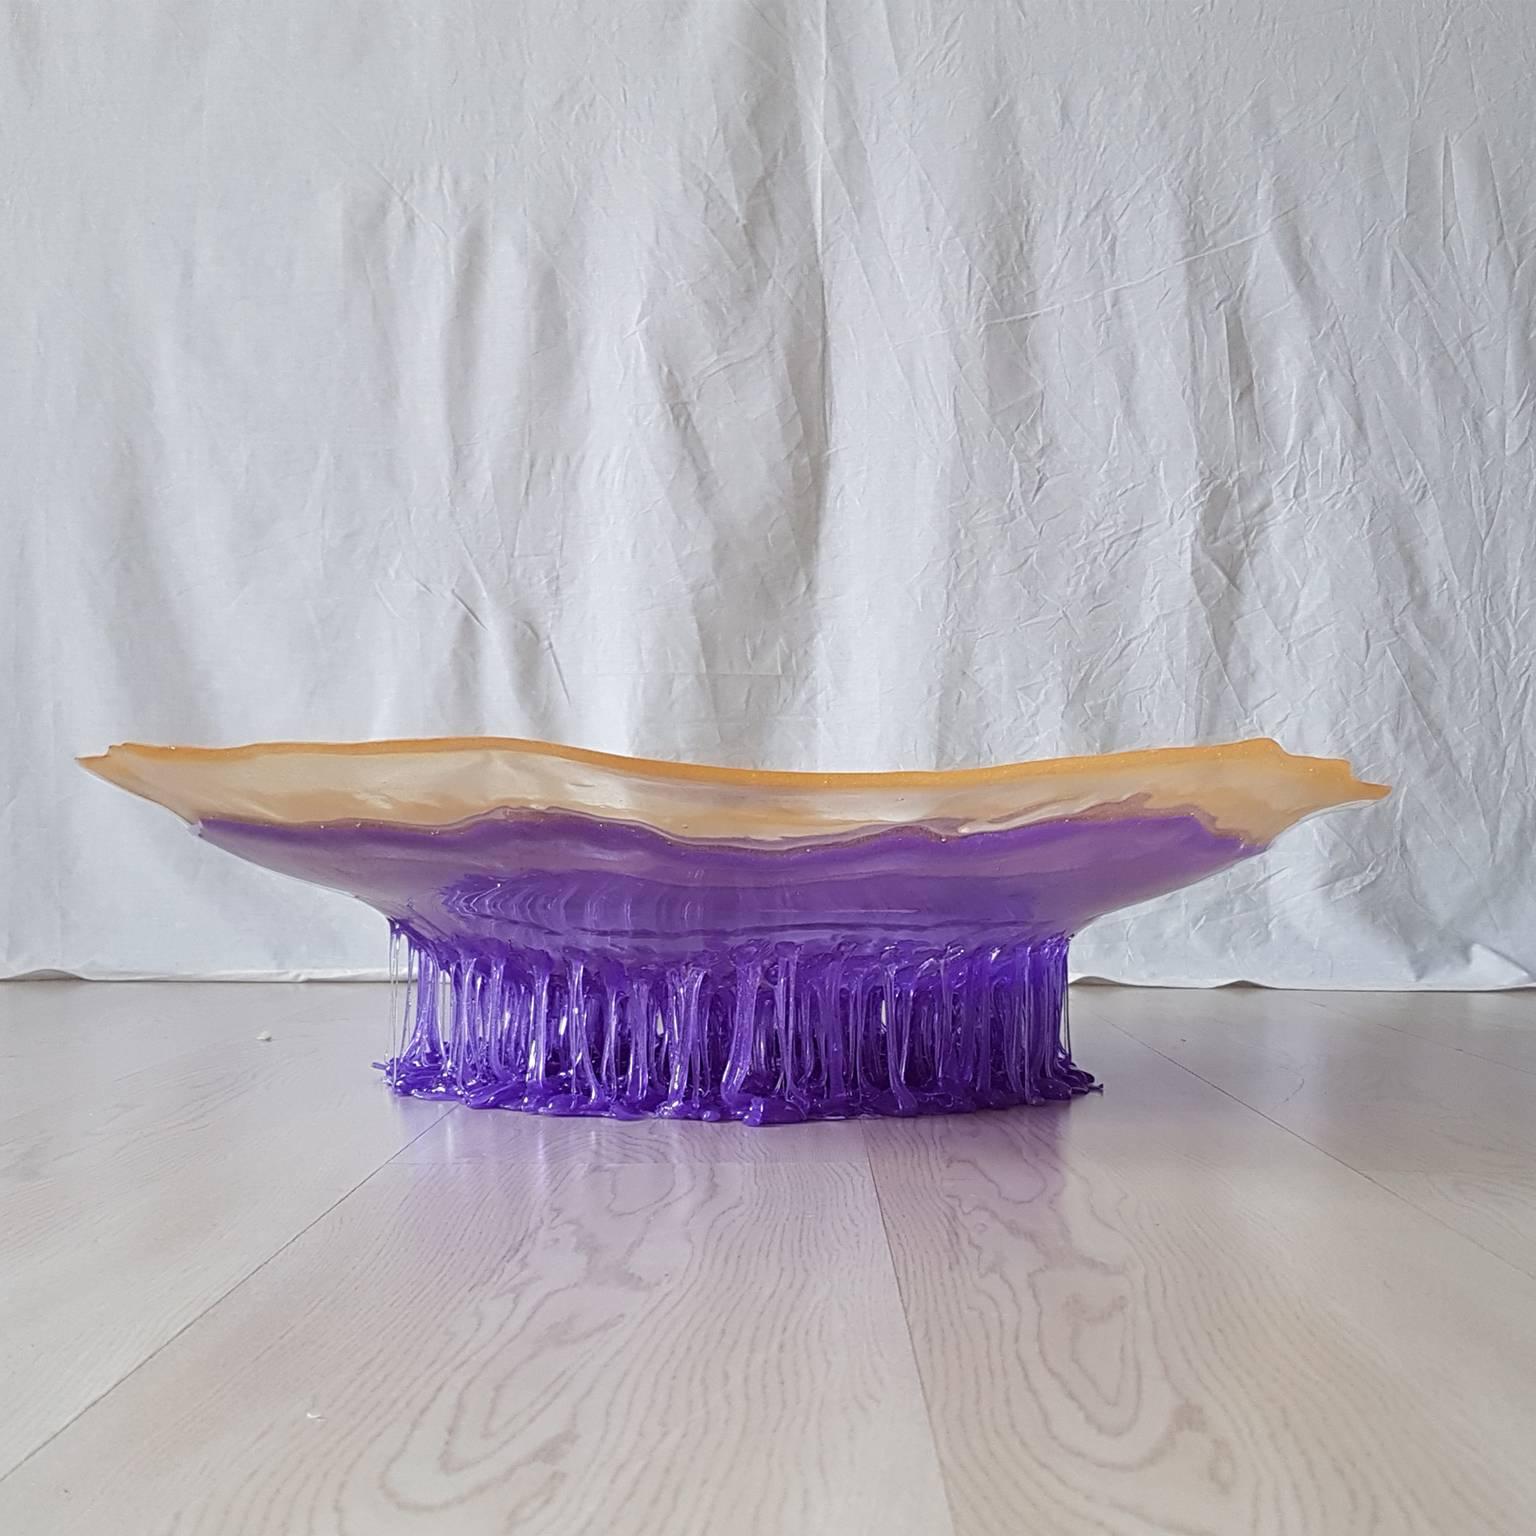 Gaetano Pesce Italian Contemporary Violet Polyurethane Bowl with Yellow Edge 1